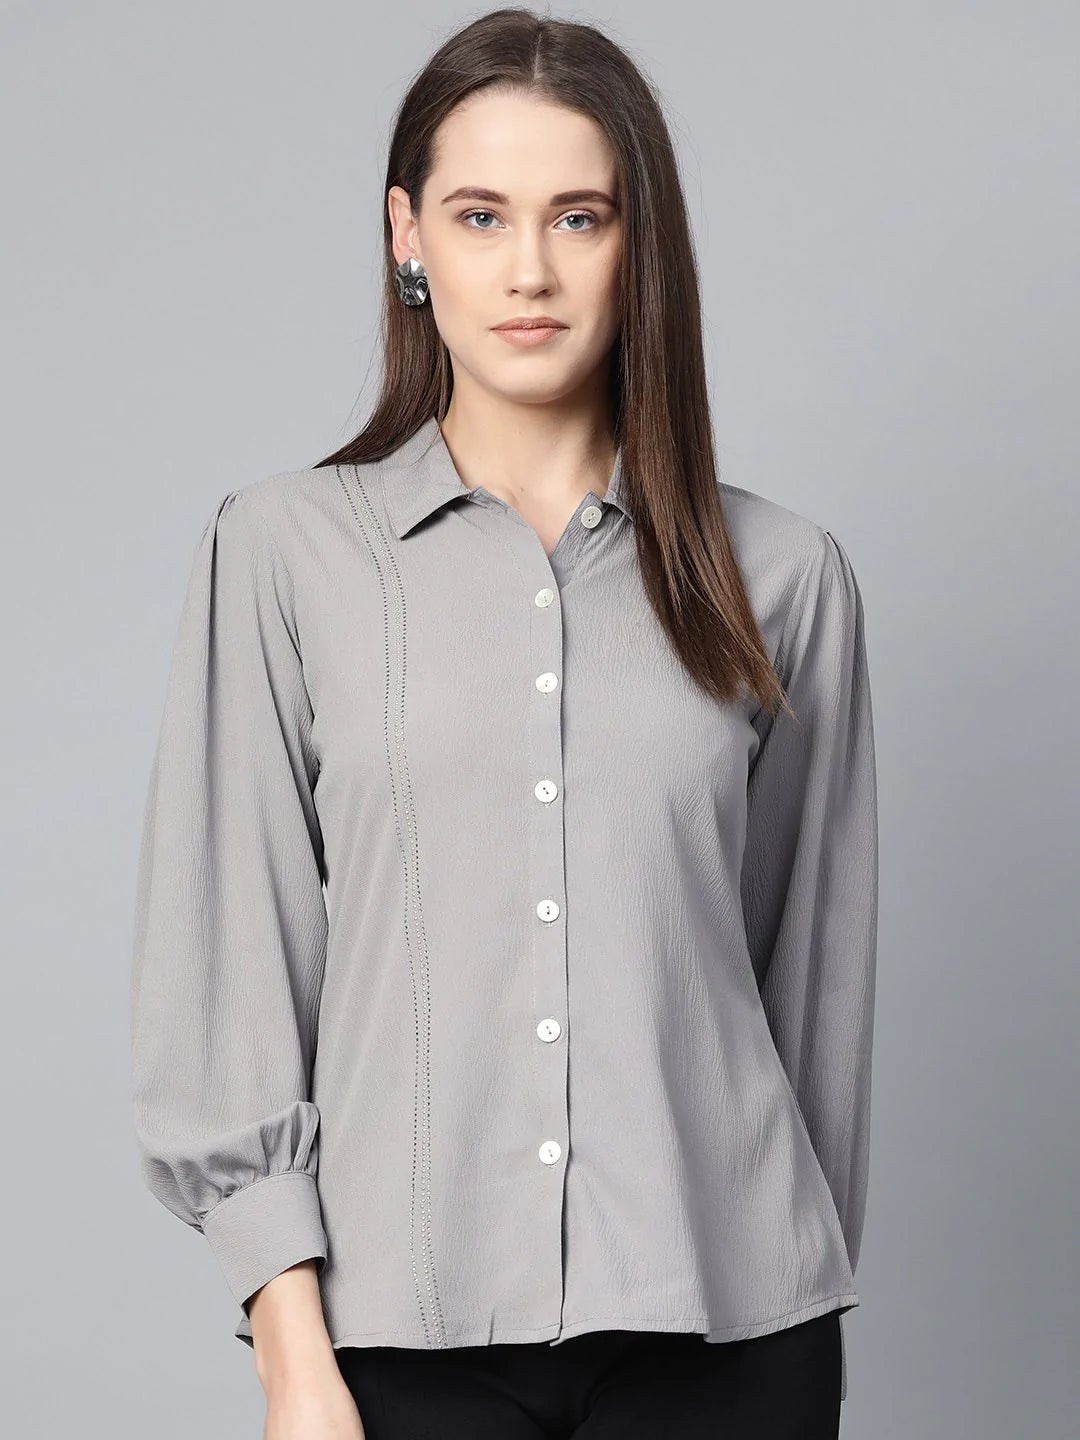 Jompers Women Grey Regular Fit Crinkled Effect Casual Shirt ( JOT 7002 Grey )